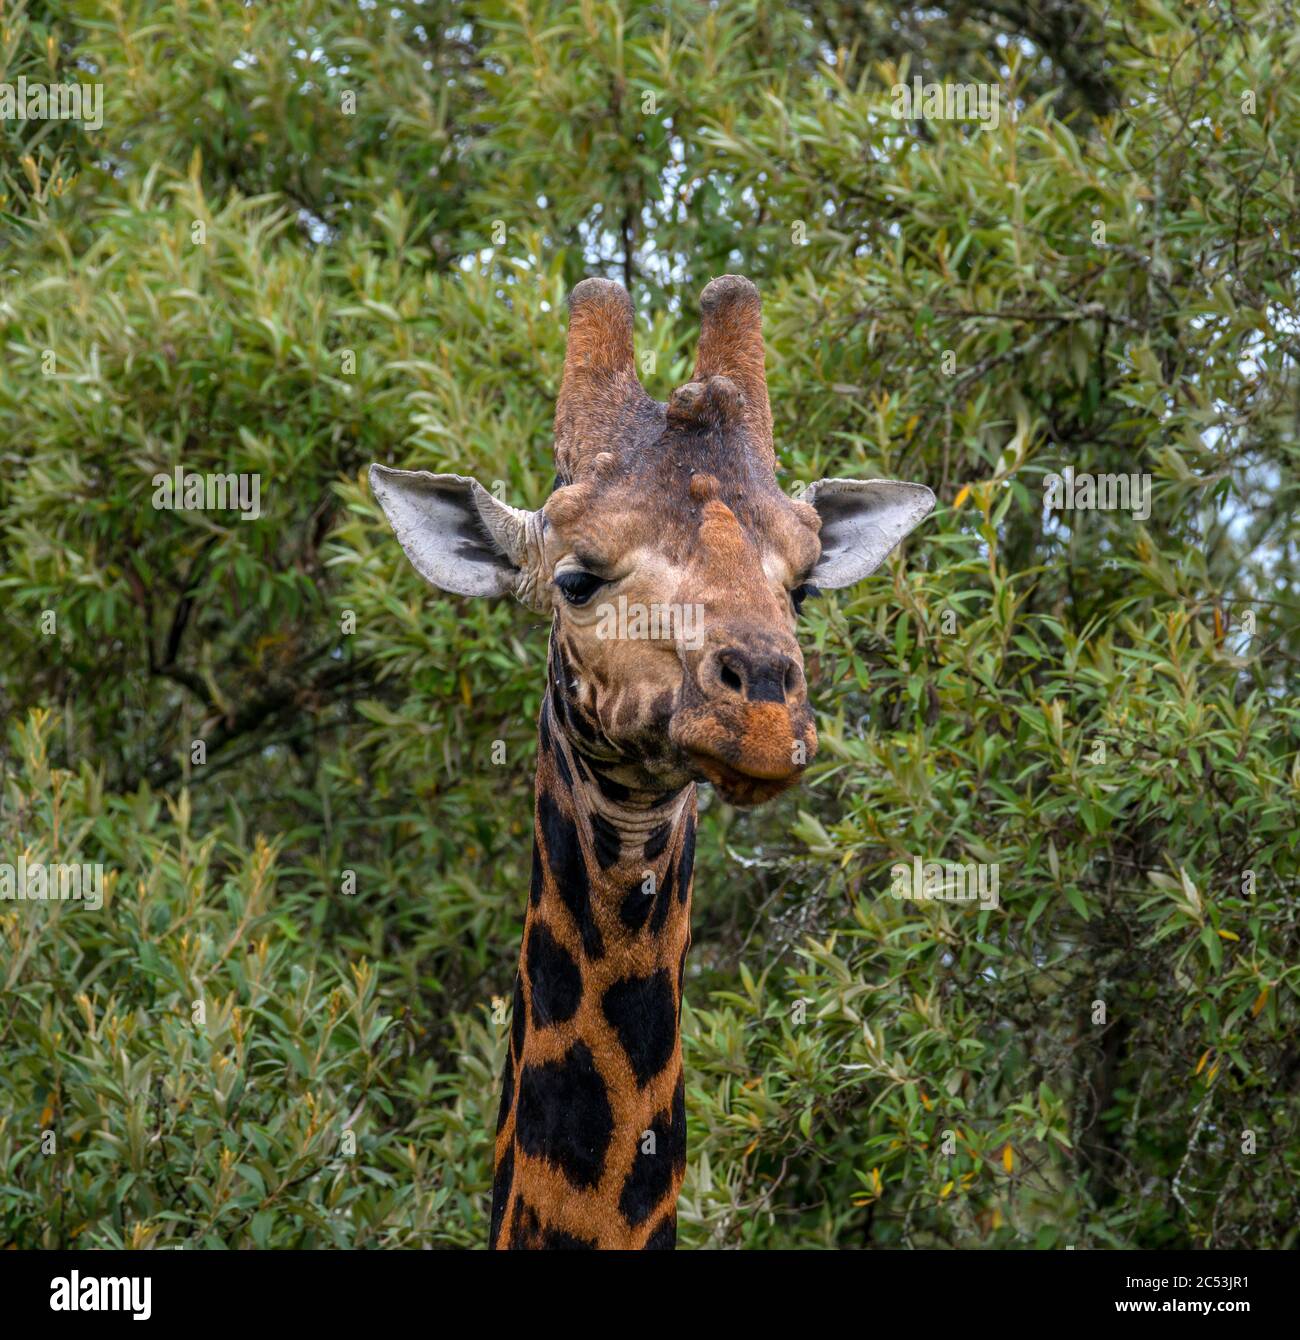 La girafe de Rothschild (Giraffa camelopardalis rothschild) dans le parc national du lac Nakuru, Kenya, Afrique Banque D'Images